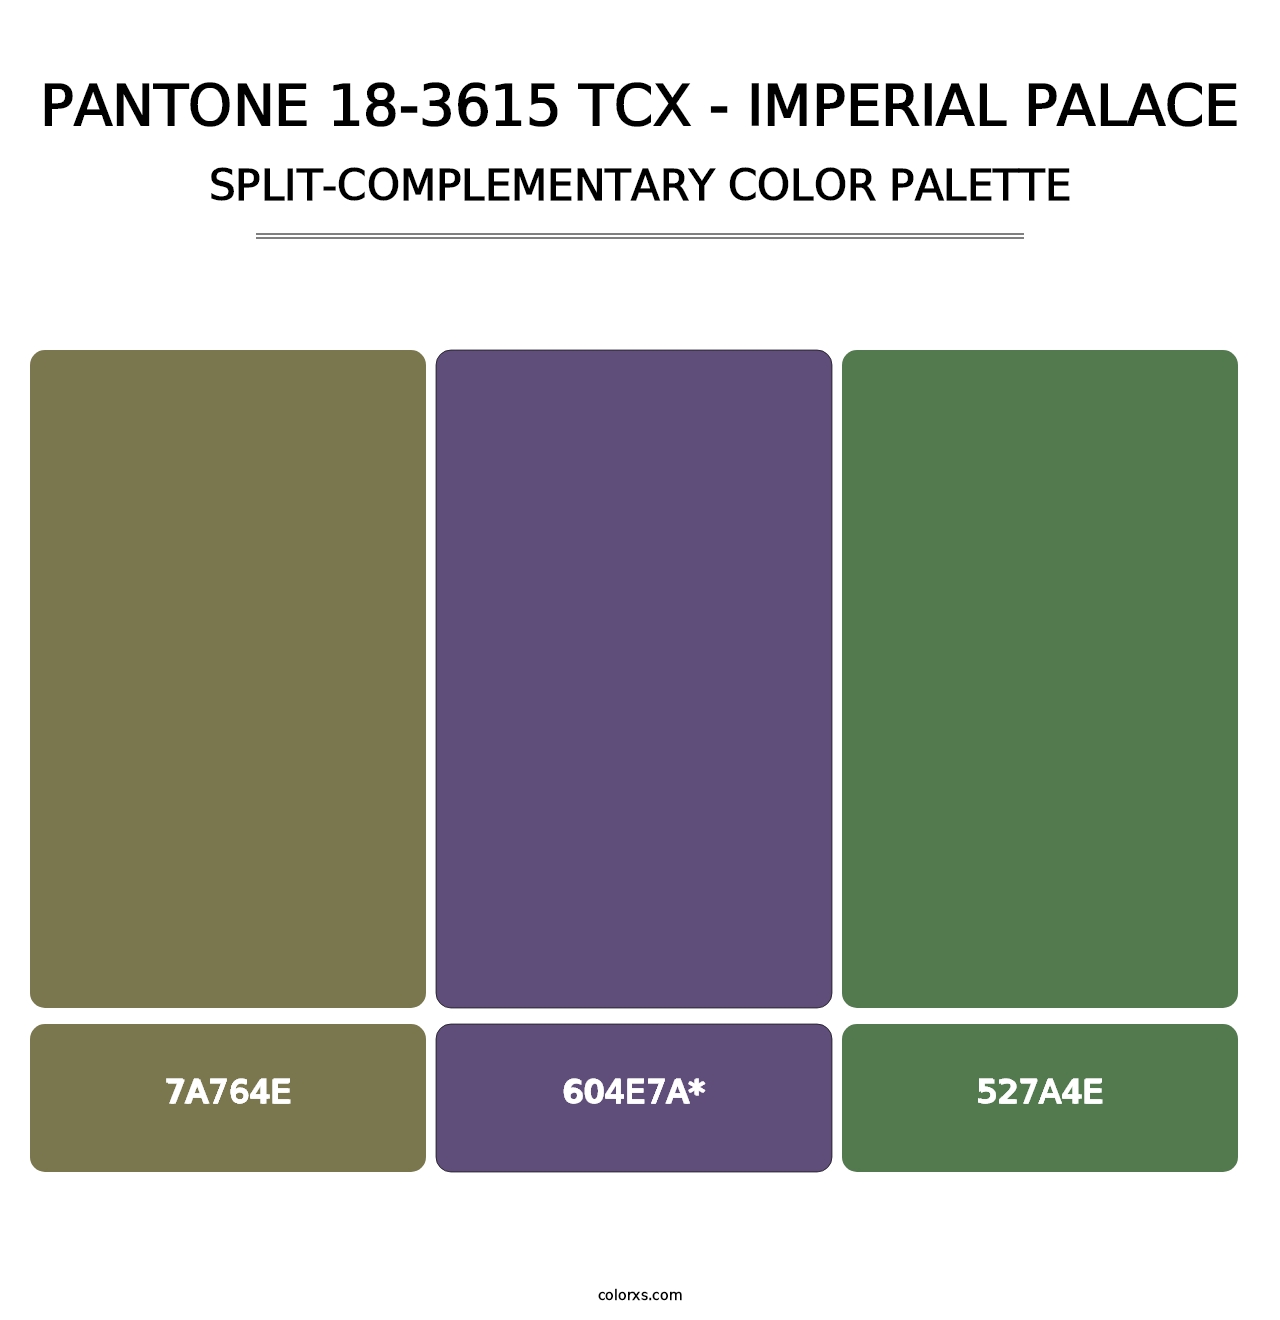 PANTONE 18-3615 TCX - Imperial Palace - Split-Complementary Color Palette